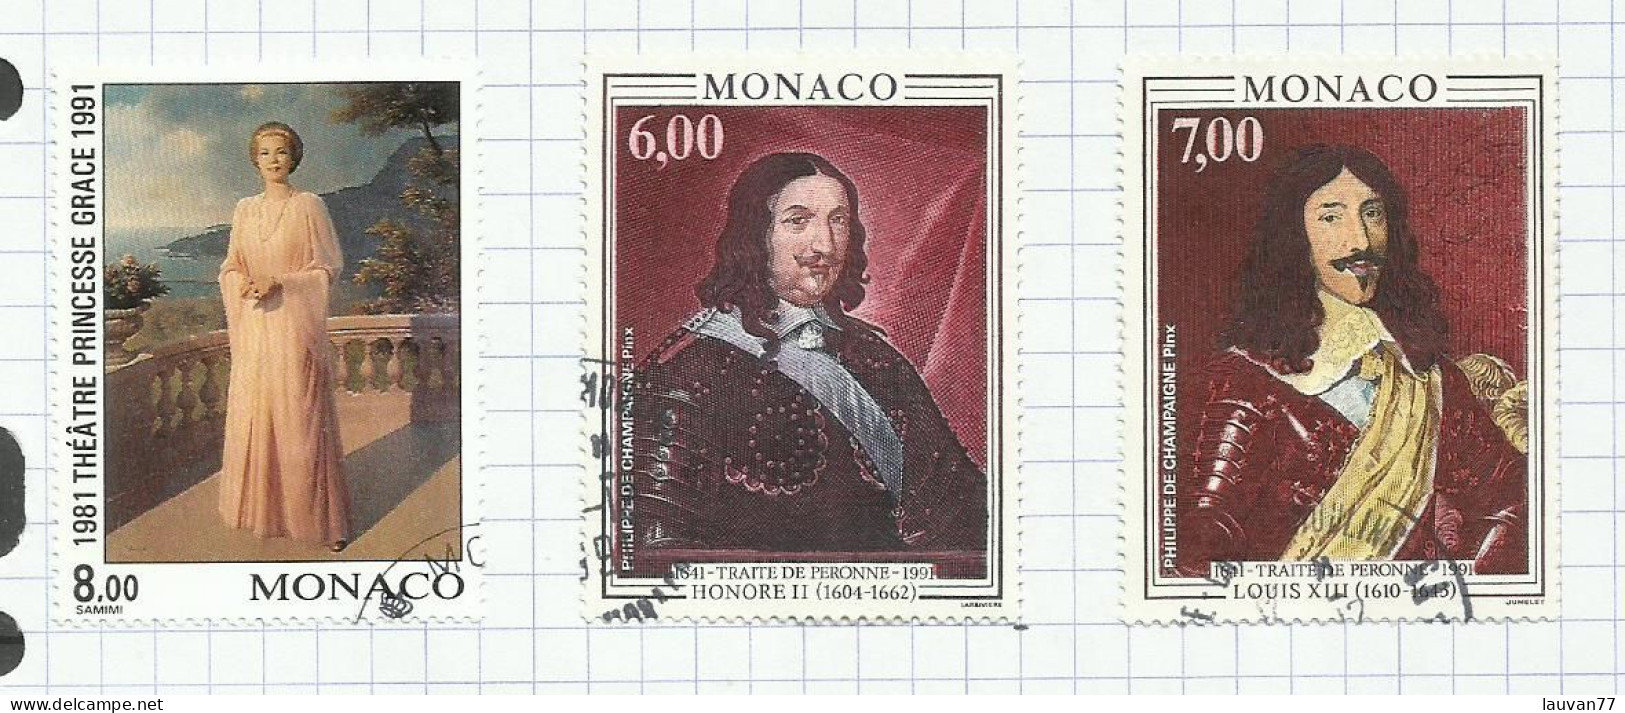 Monaco N°1786 à 1788 Cote 10.85€ - Usados